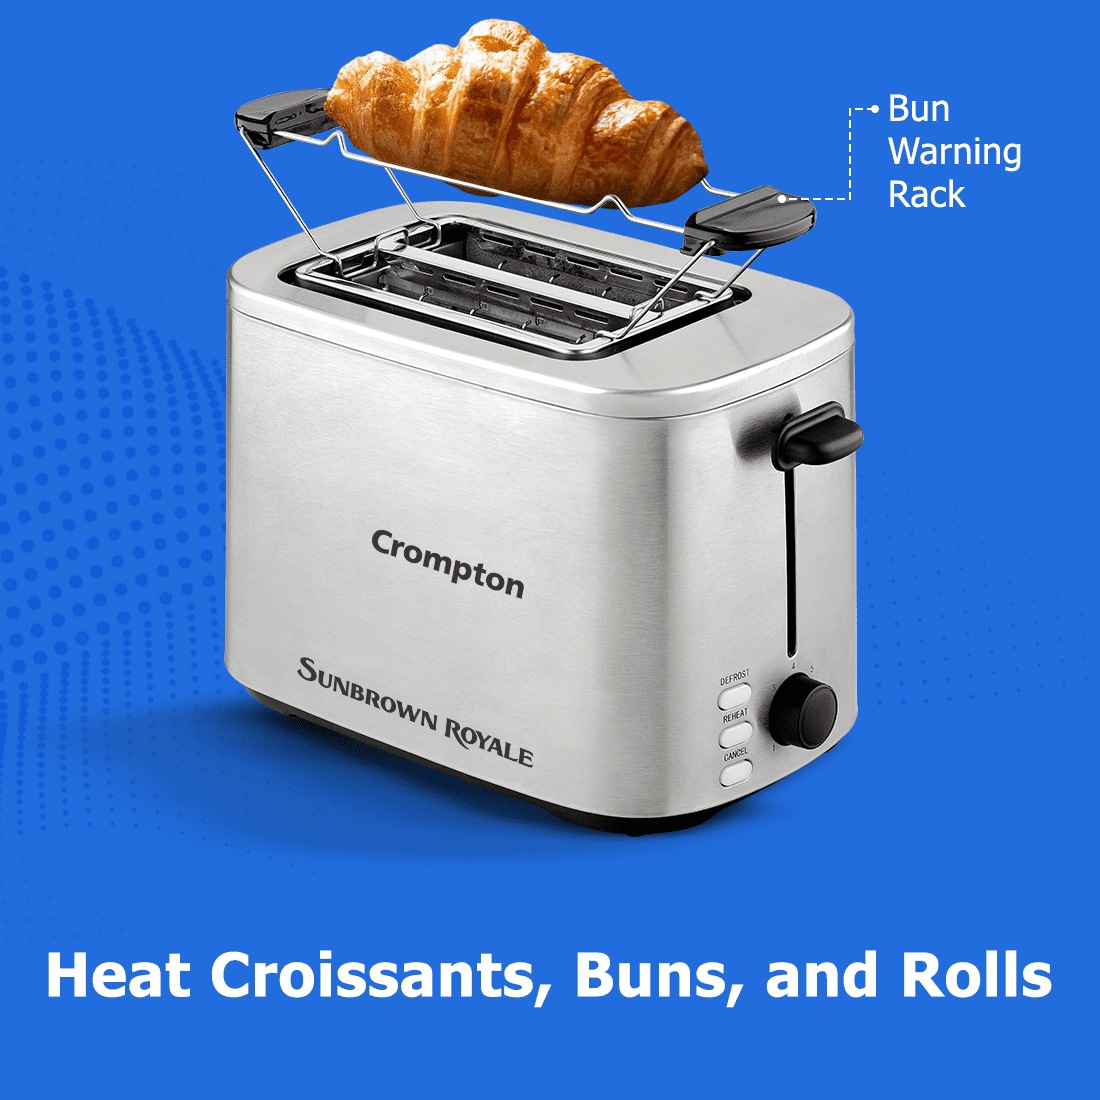 Sunbrown Royale Bun Toaster with Bun Rack at Best Price